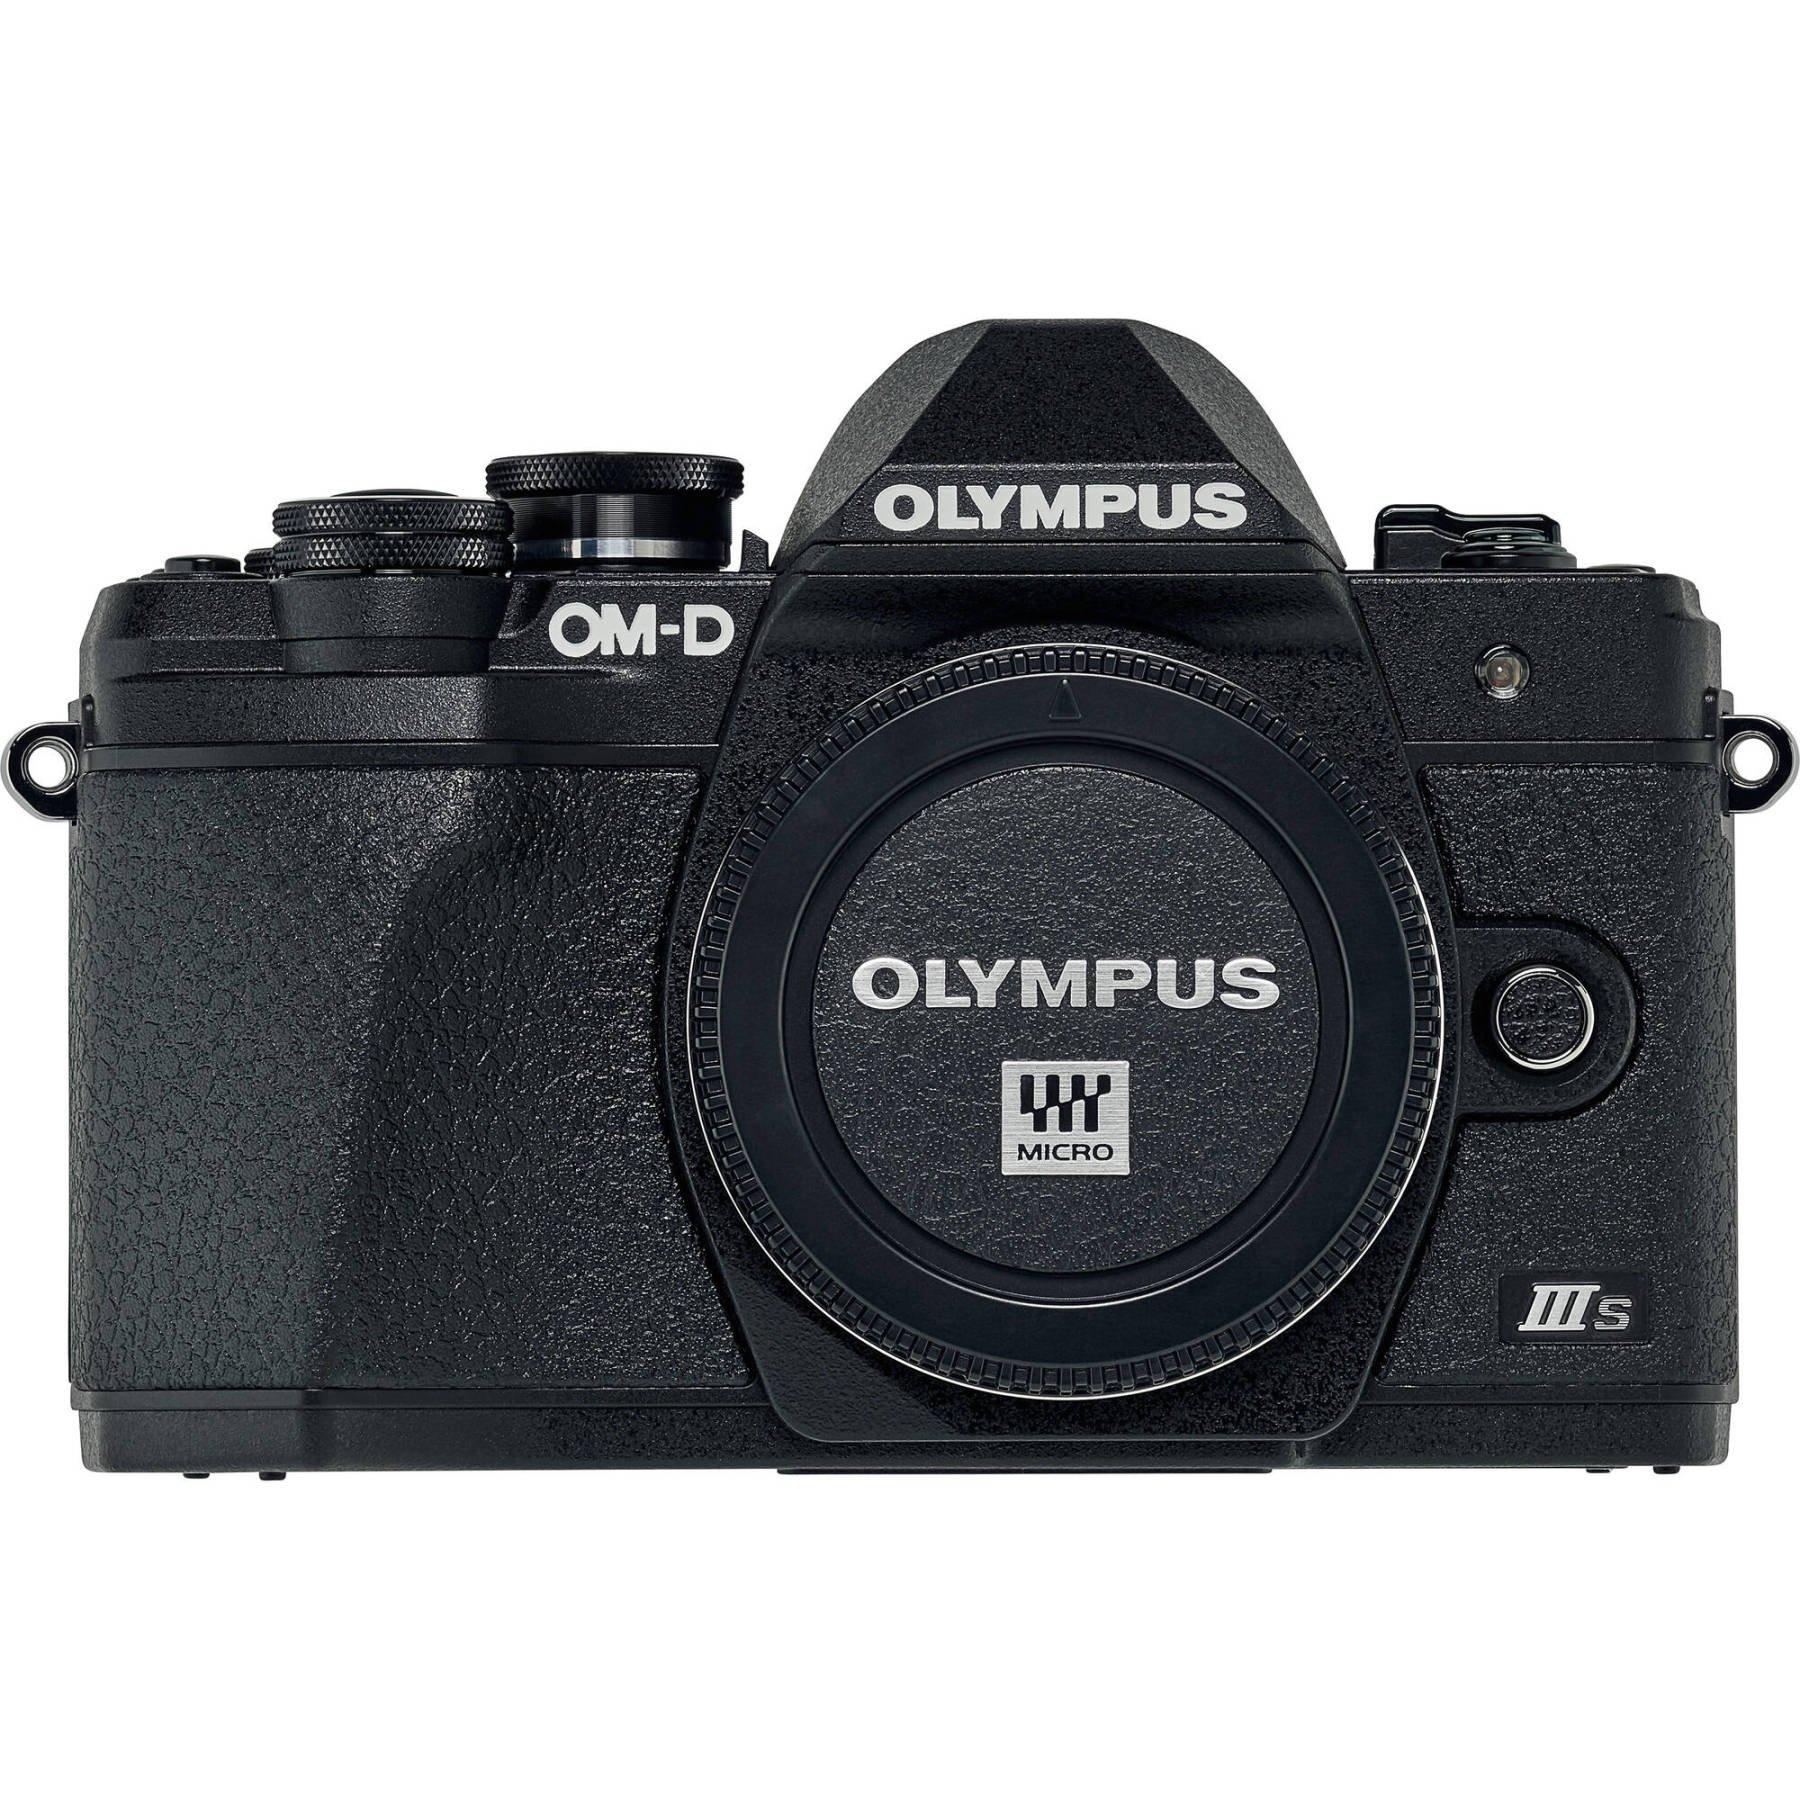 list item 5 of 5 Olympus OM-D E-M10 Mark III Mirrorless Digital Camera with 14-42mm II R Lens